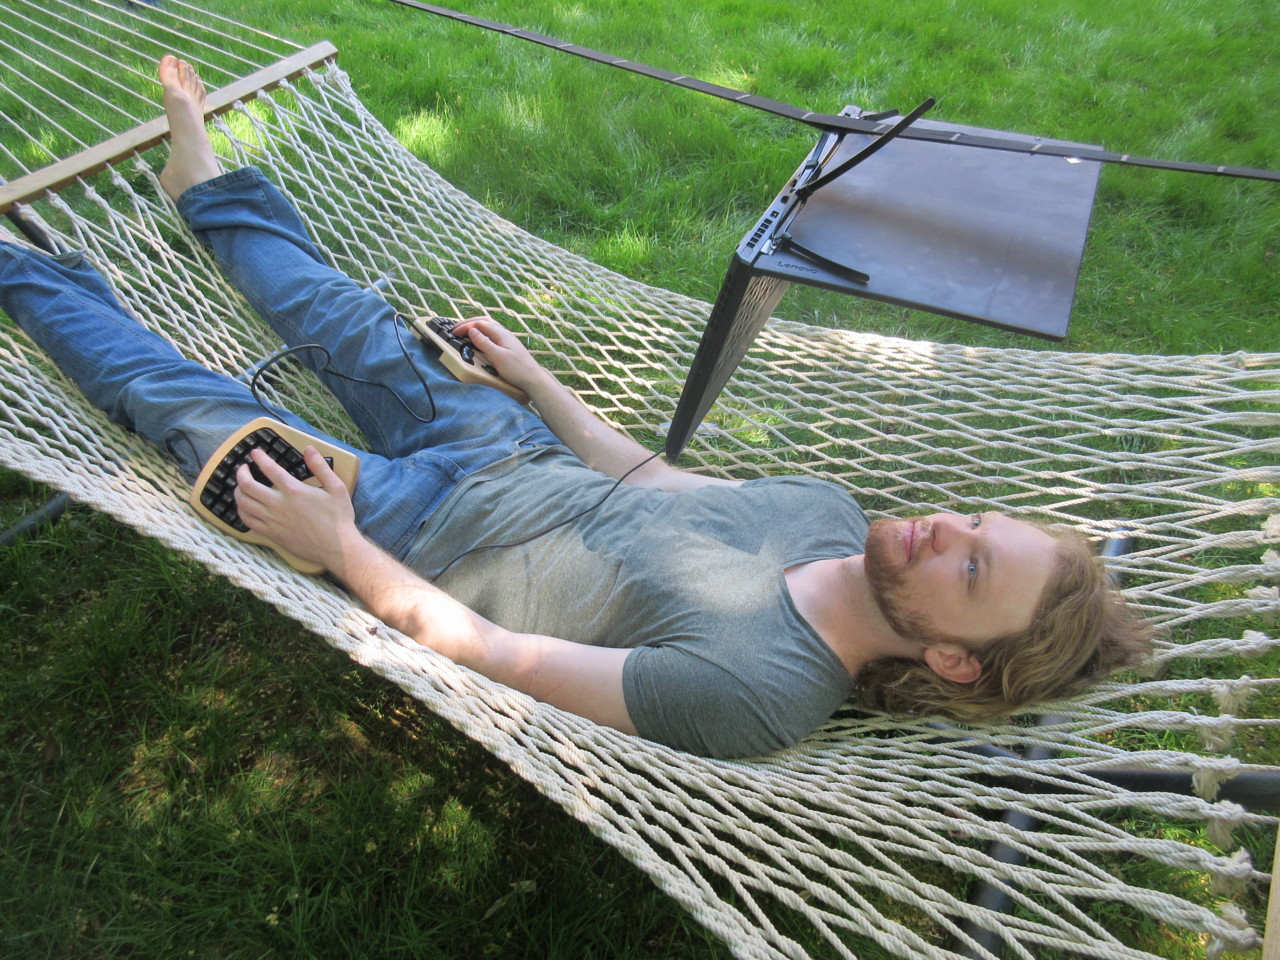 Michael Sloan in hammock, using computer